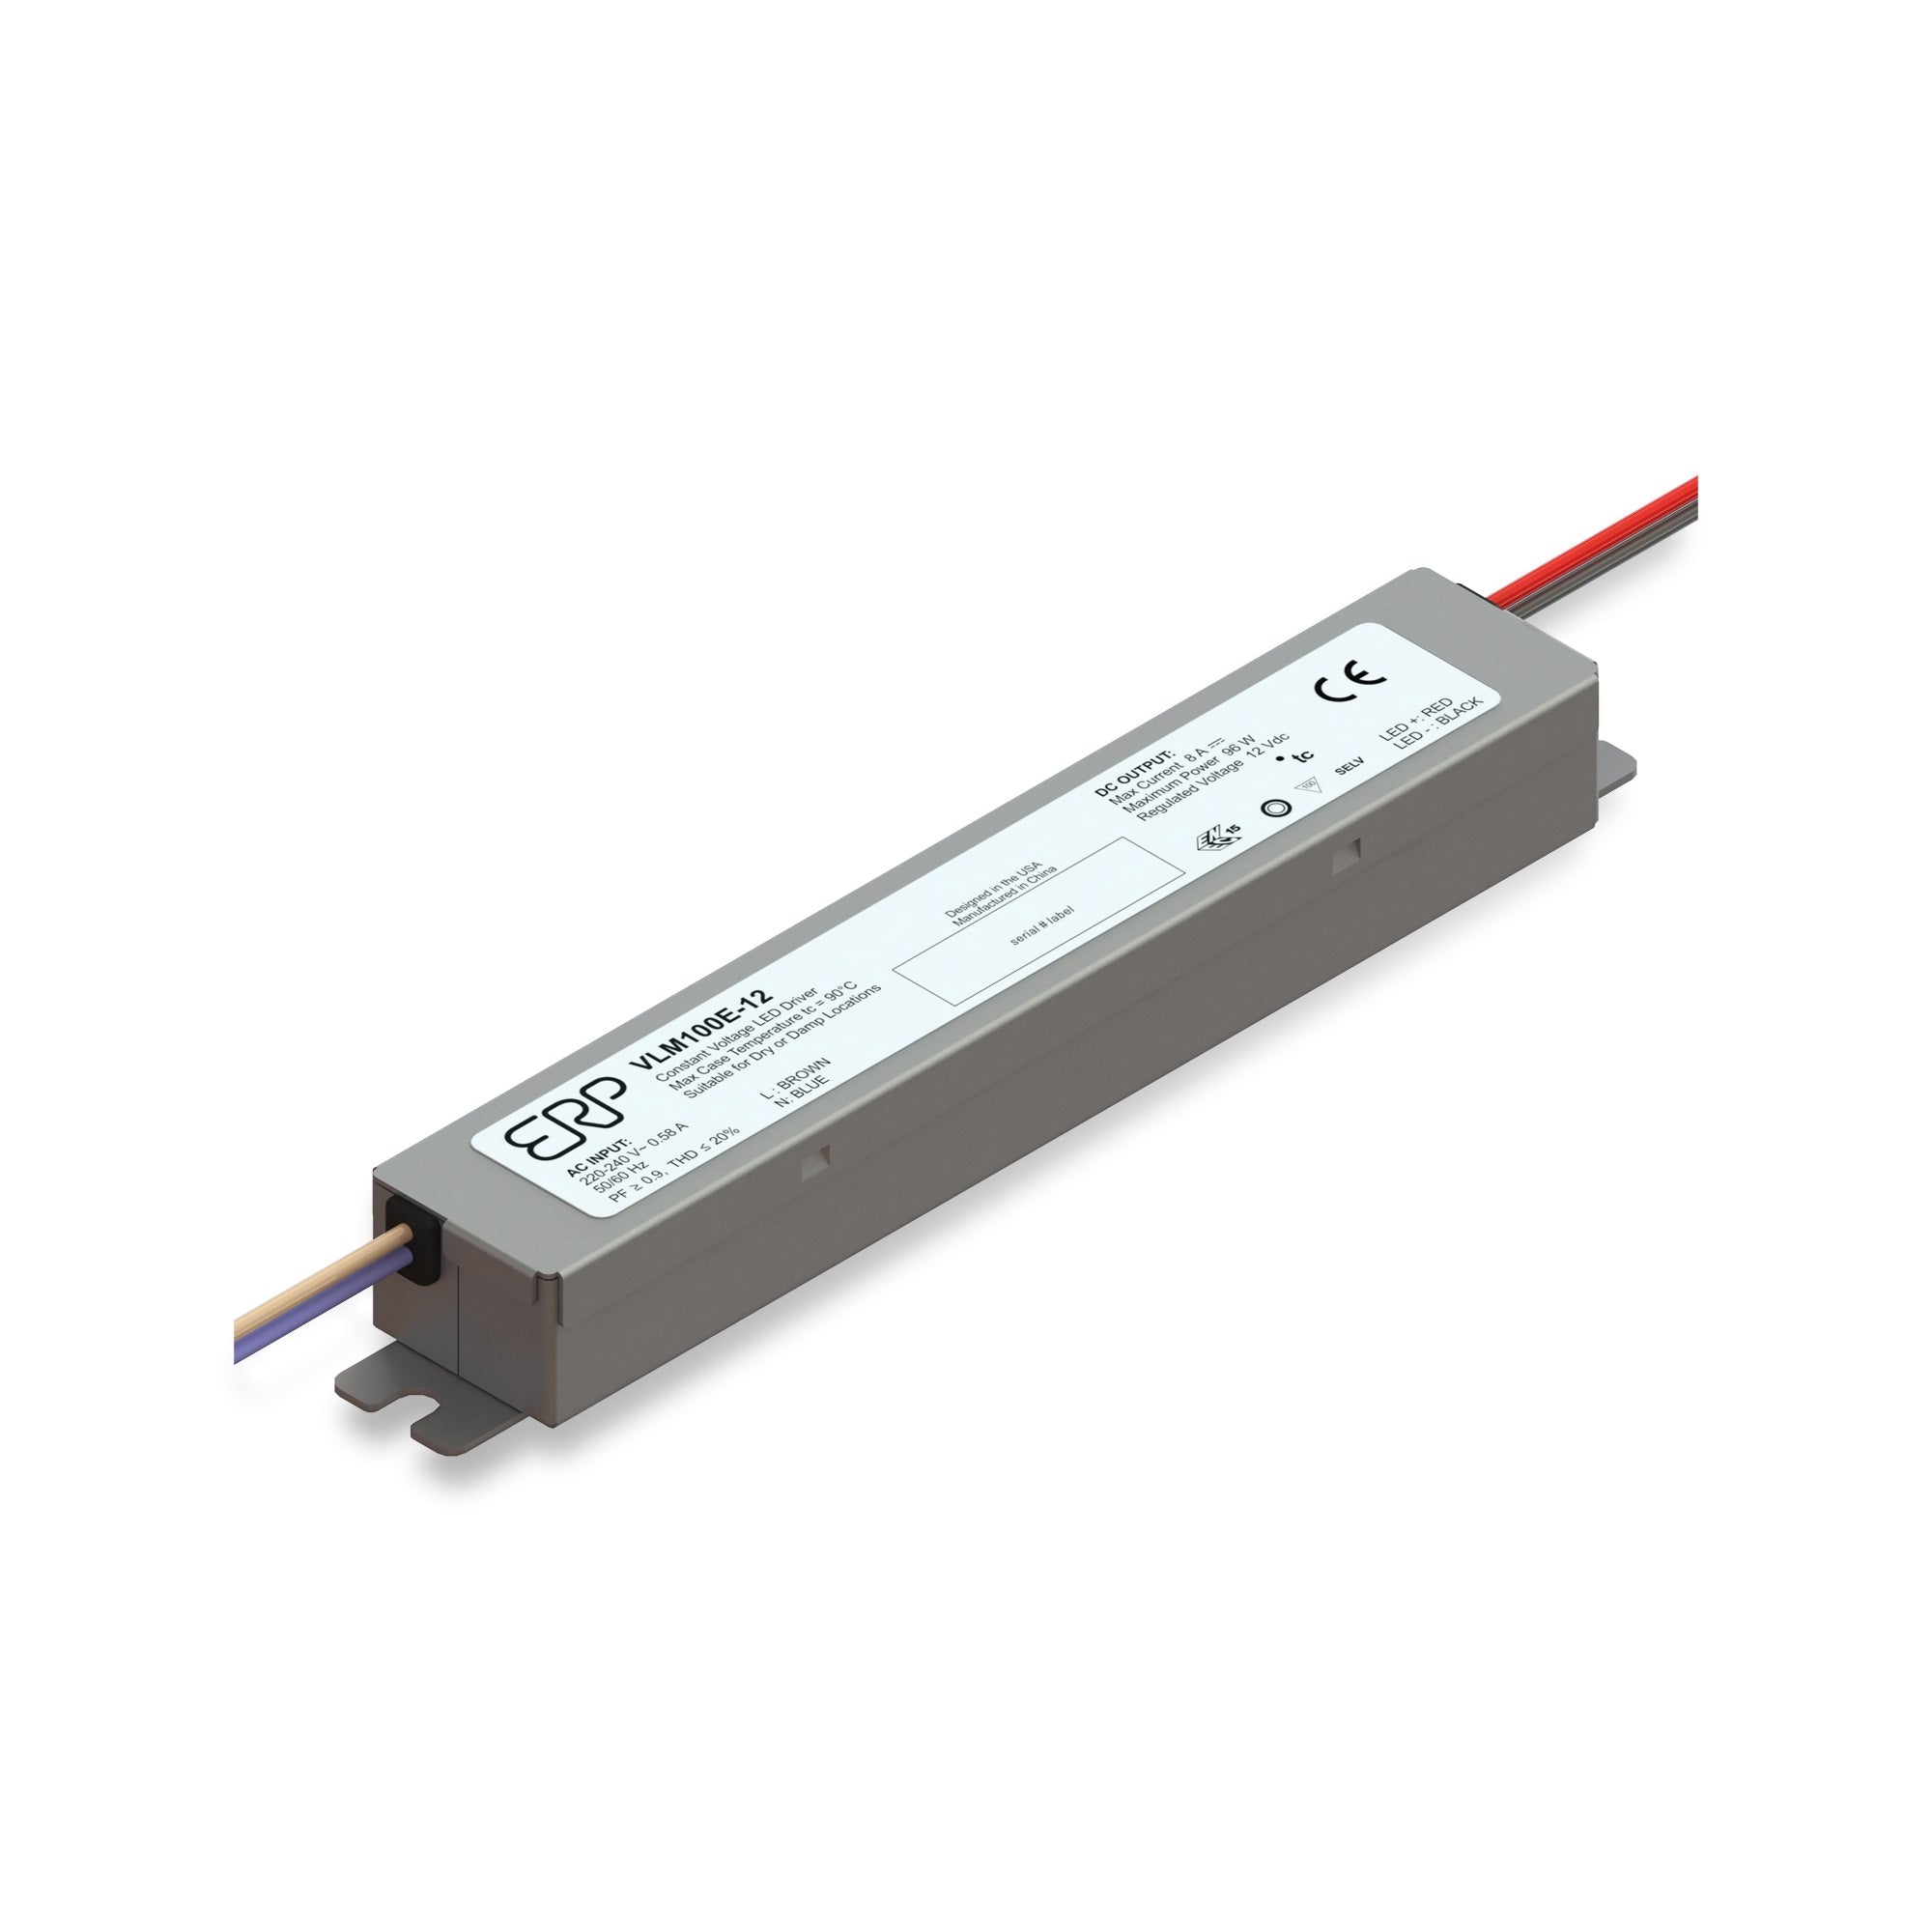 ERP Power VLM100E-48 48V-96W power supply with leads